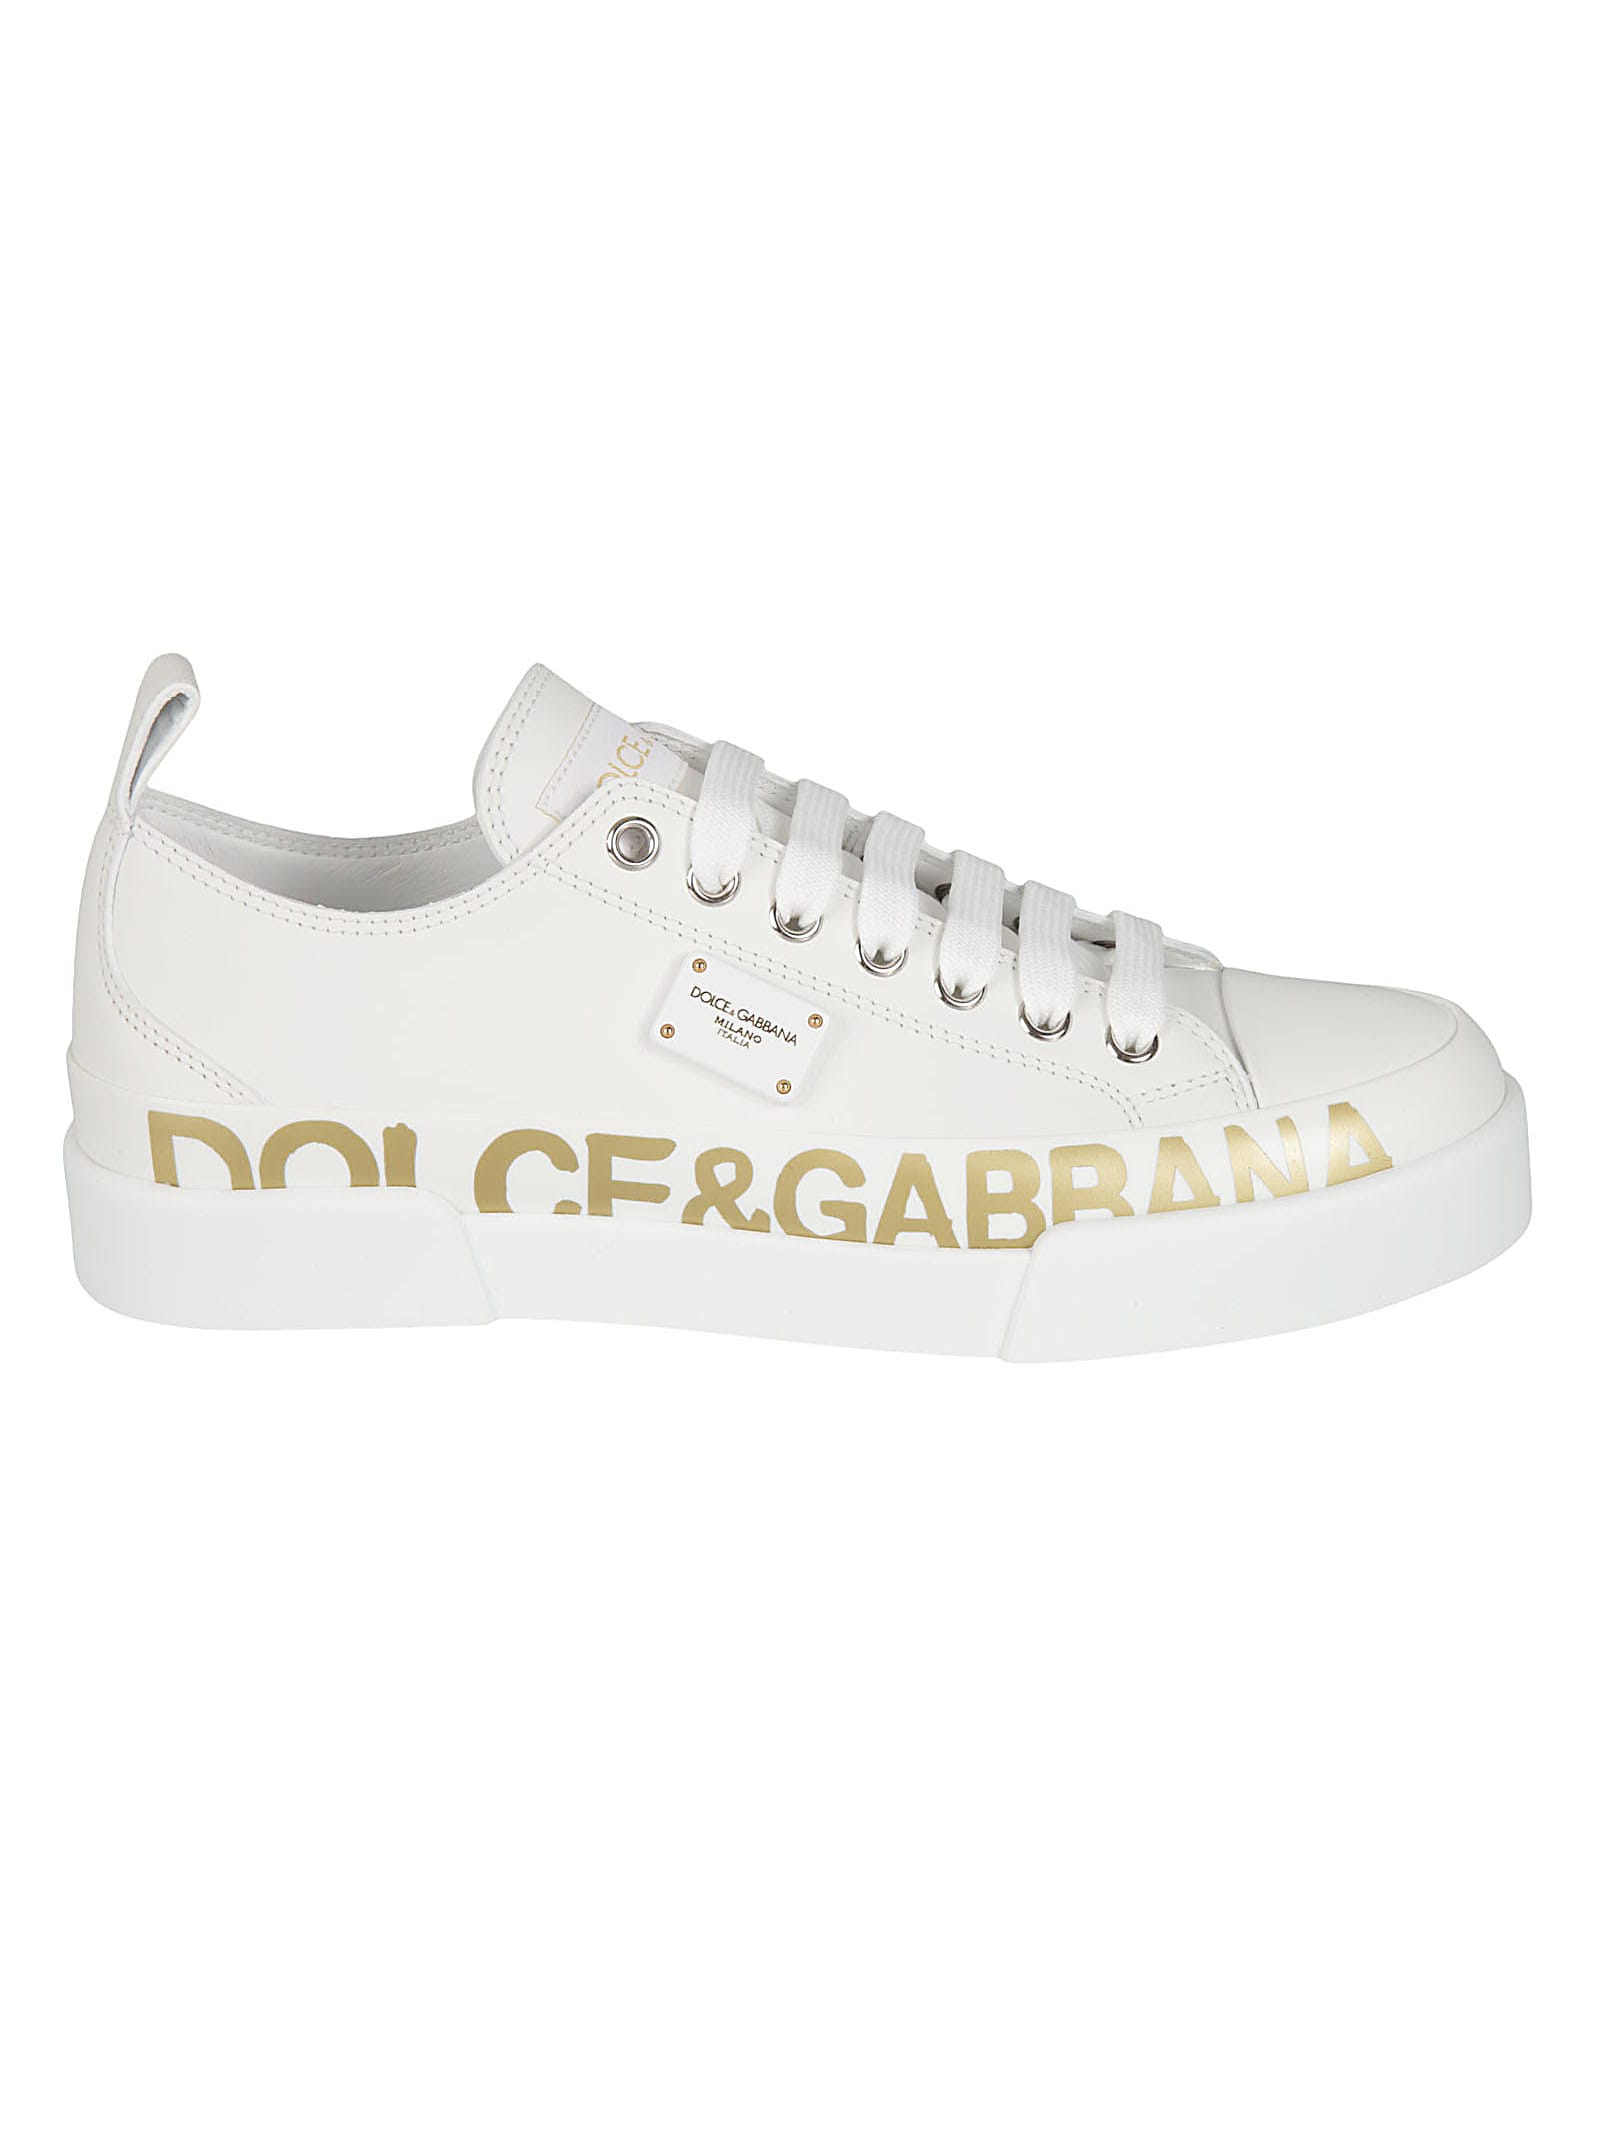 Dolce & Gabbana Logo Plaque Sneakers